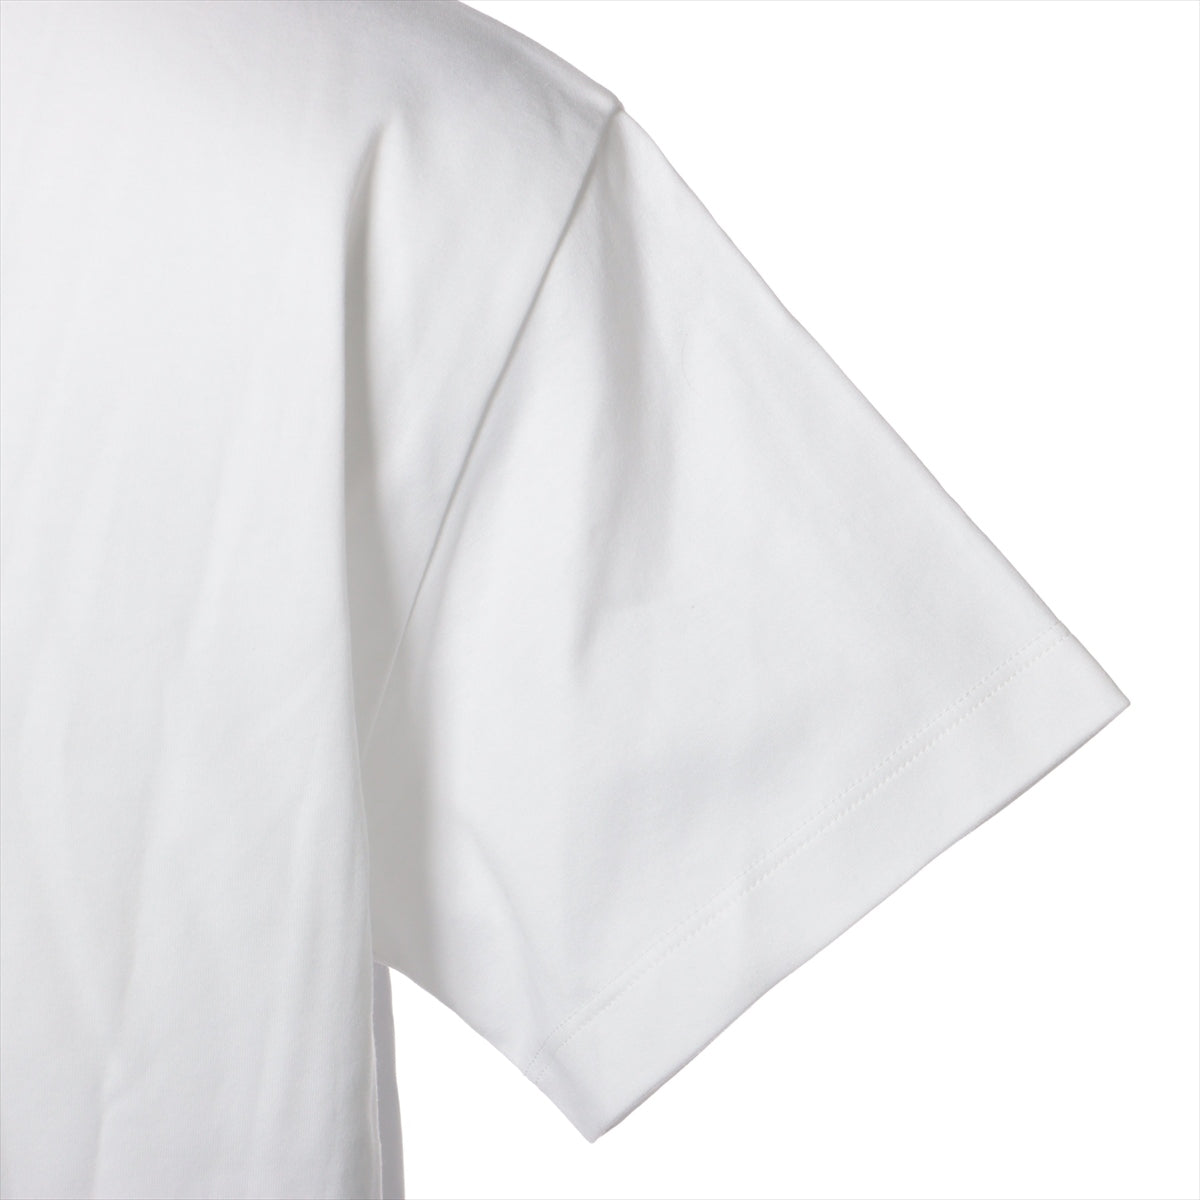 Louis Vuitton x Yayoi Kusama 23SS Cotton T-shirt M Ladies' White  RW232J LV×YK with tag